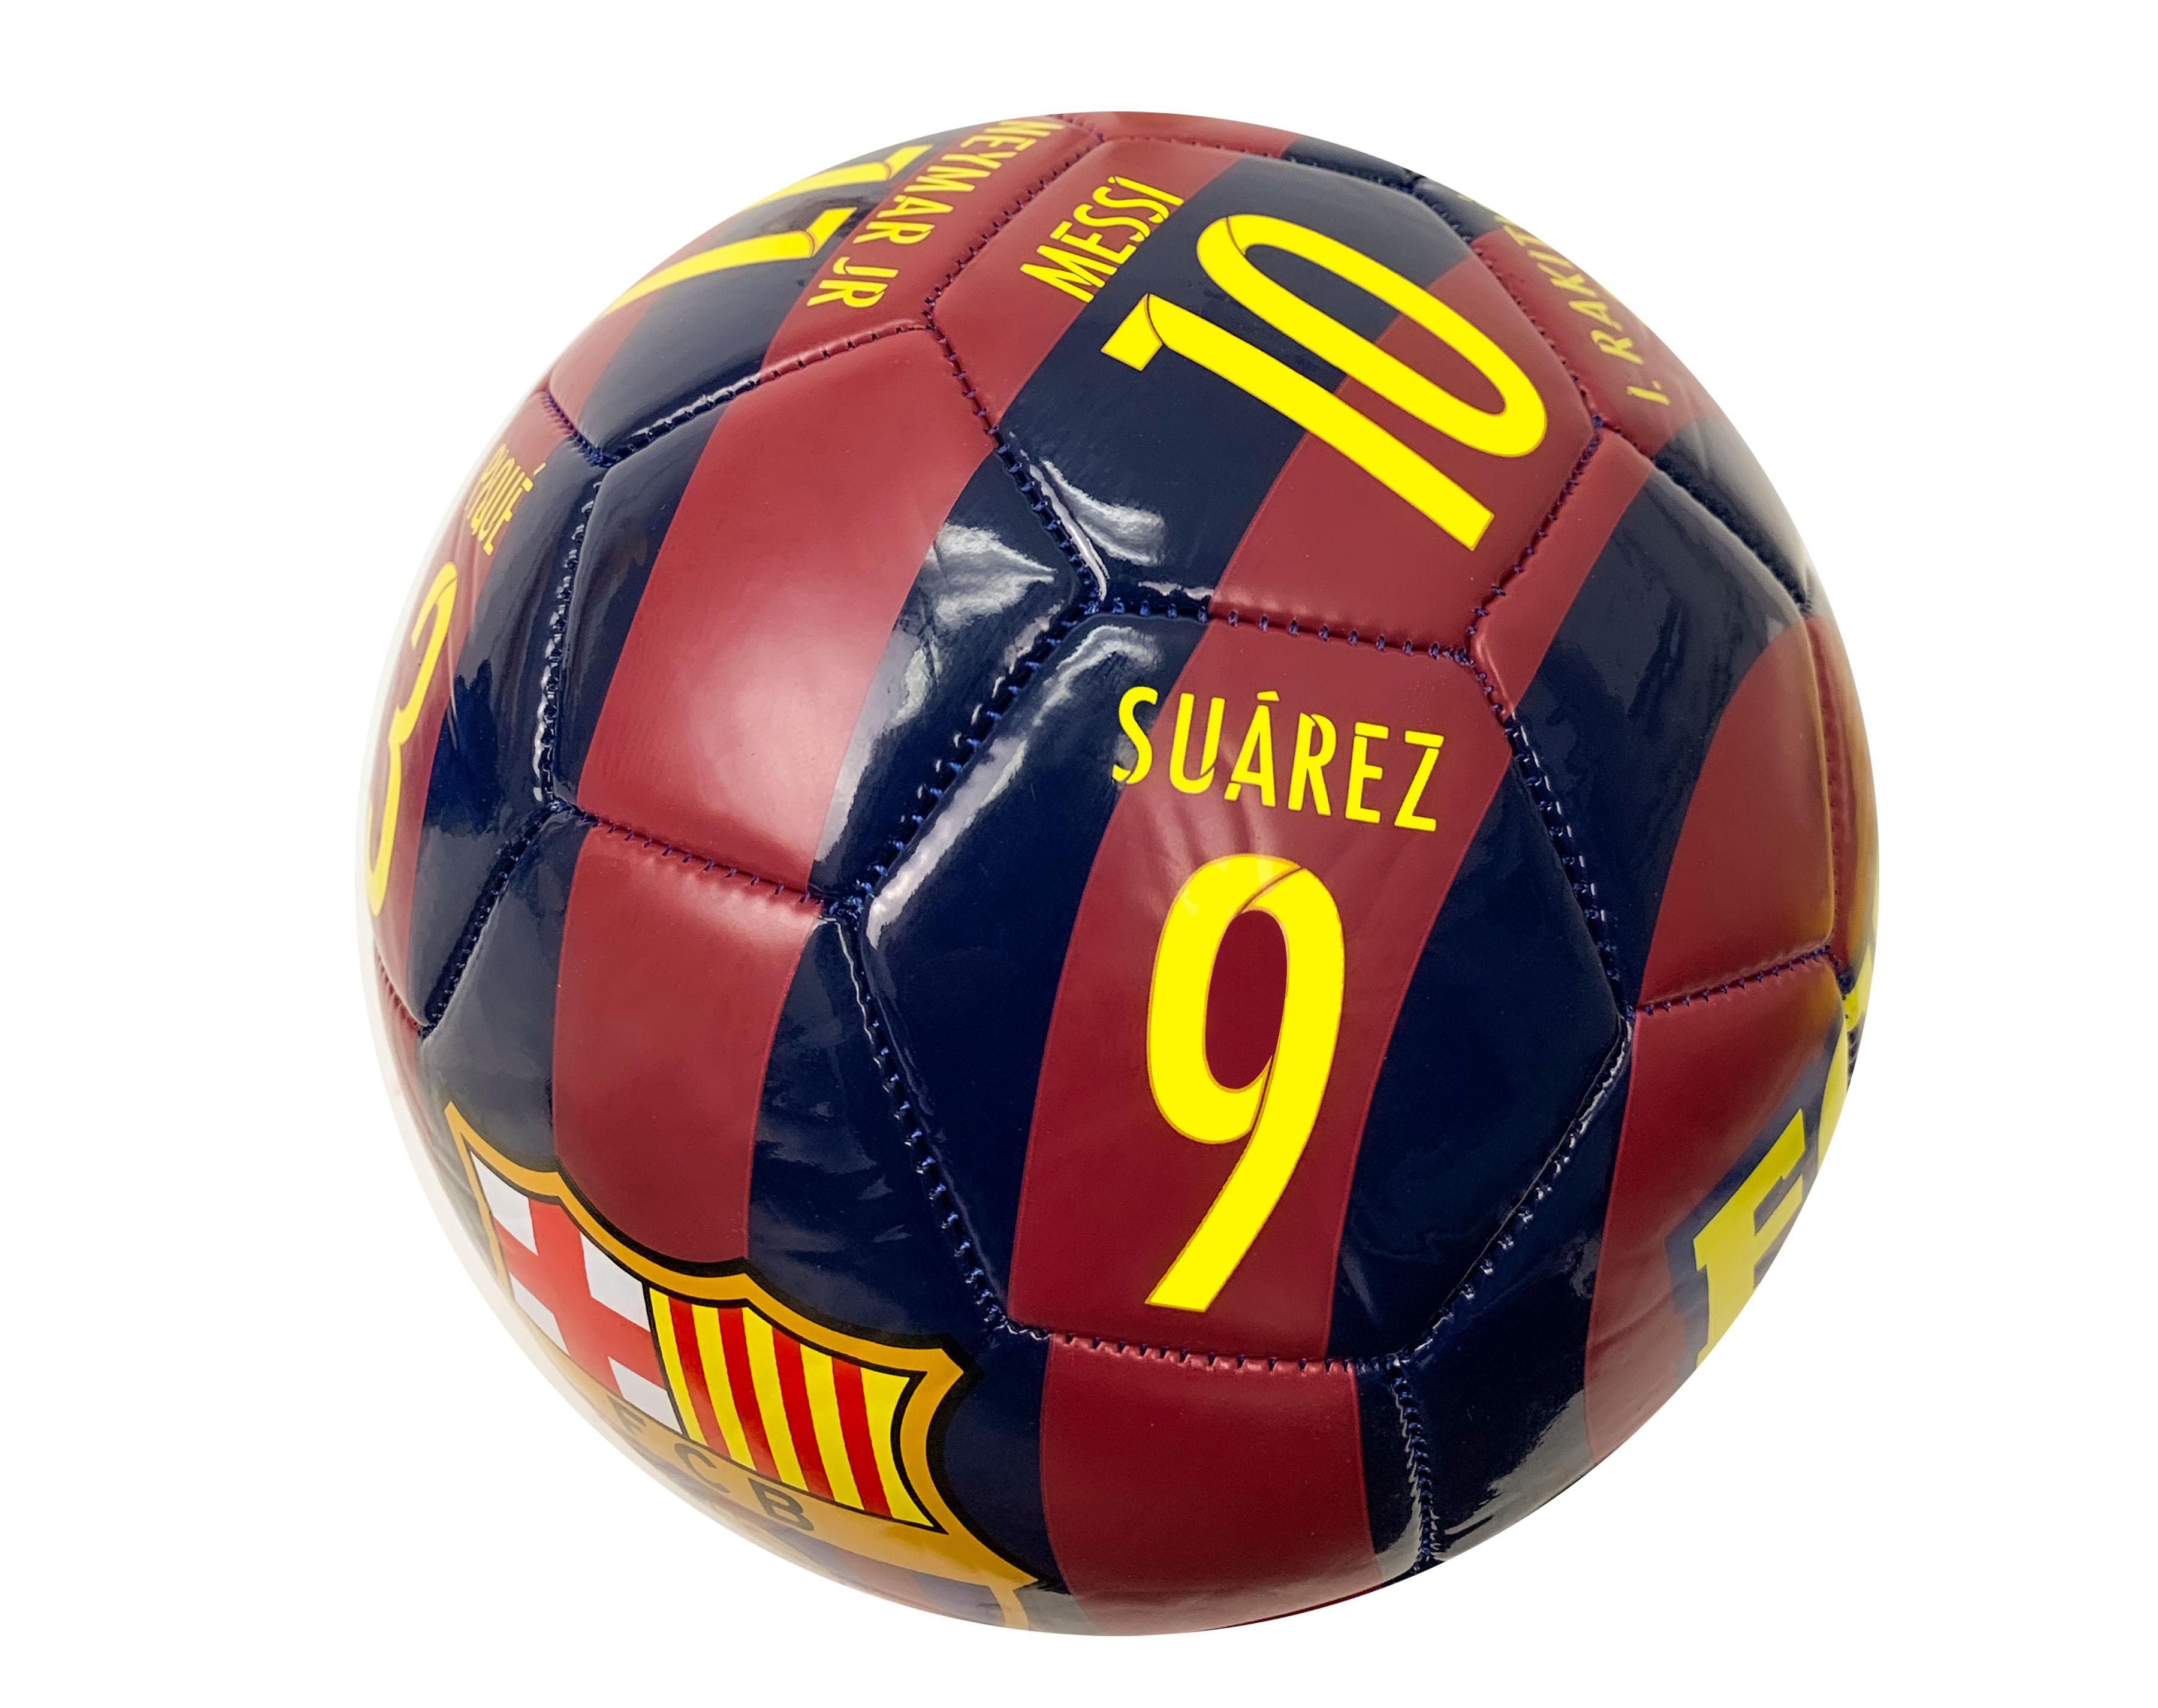 Barcelona Soccer ball (Size 5), FC Barcelona Players Ball Name & Number #5 - image 4 of 5